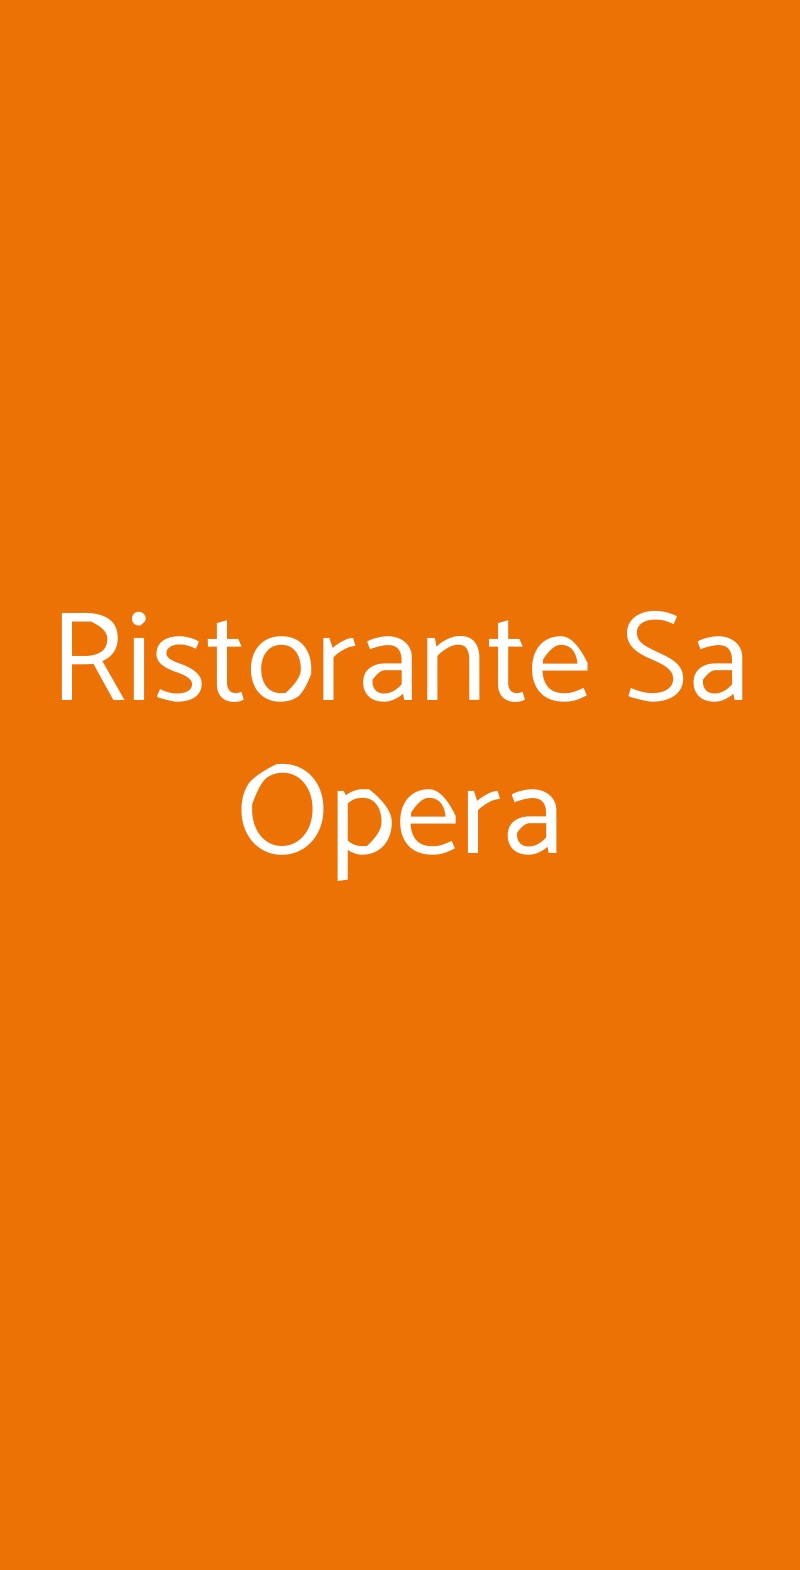 Ristorante Sa Opera Torino menù 1 pagina